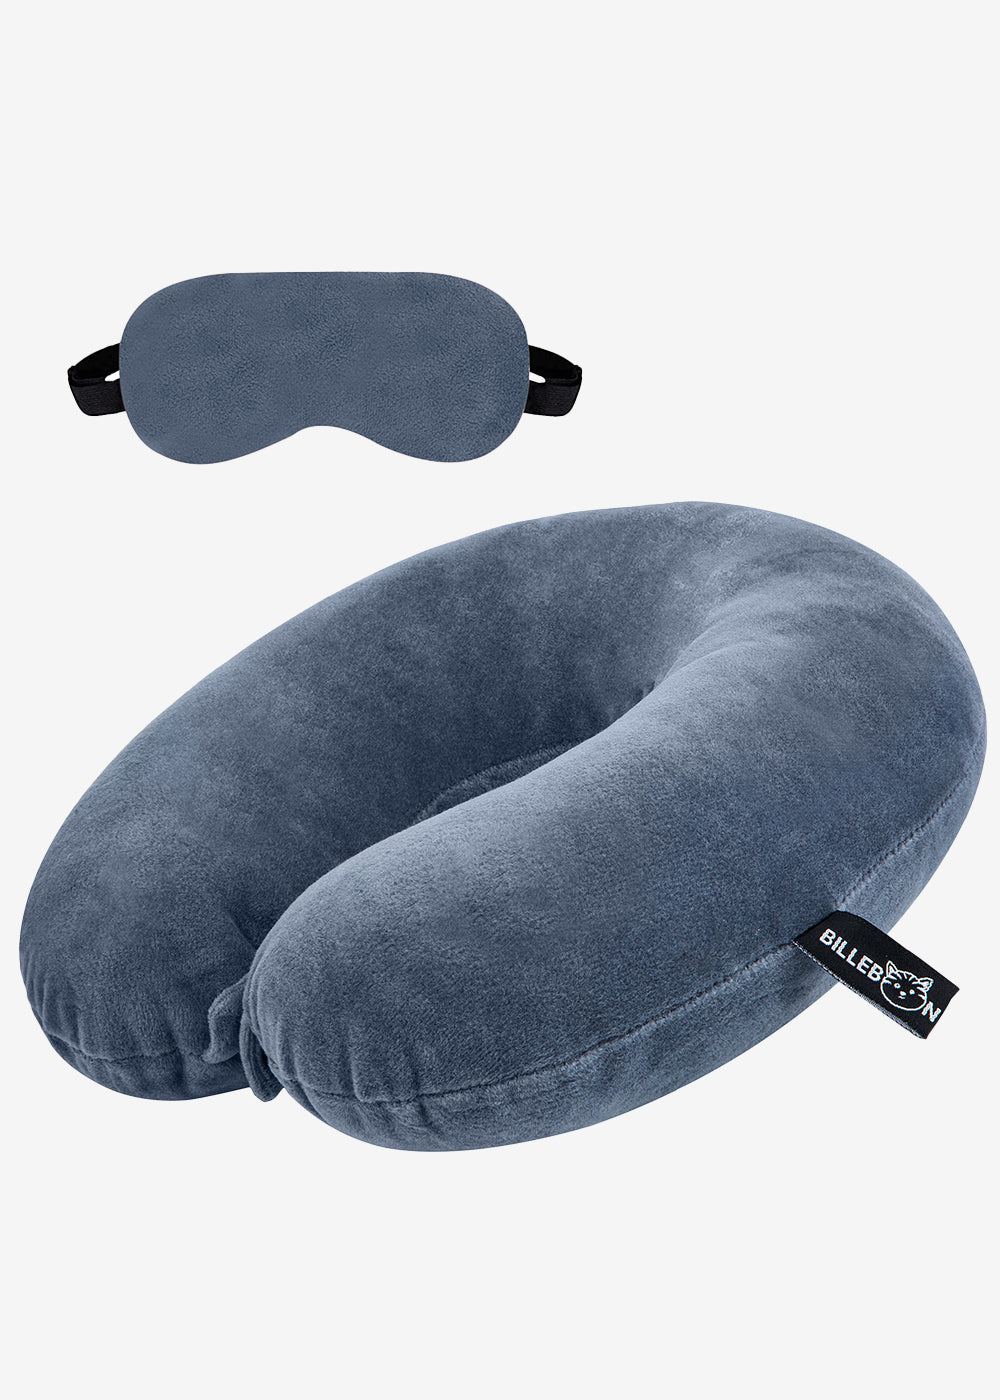 Billebon Premium Fibre Filled Neck Pillow With Eye mask custom